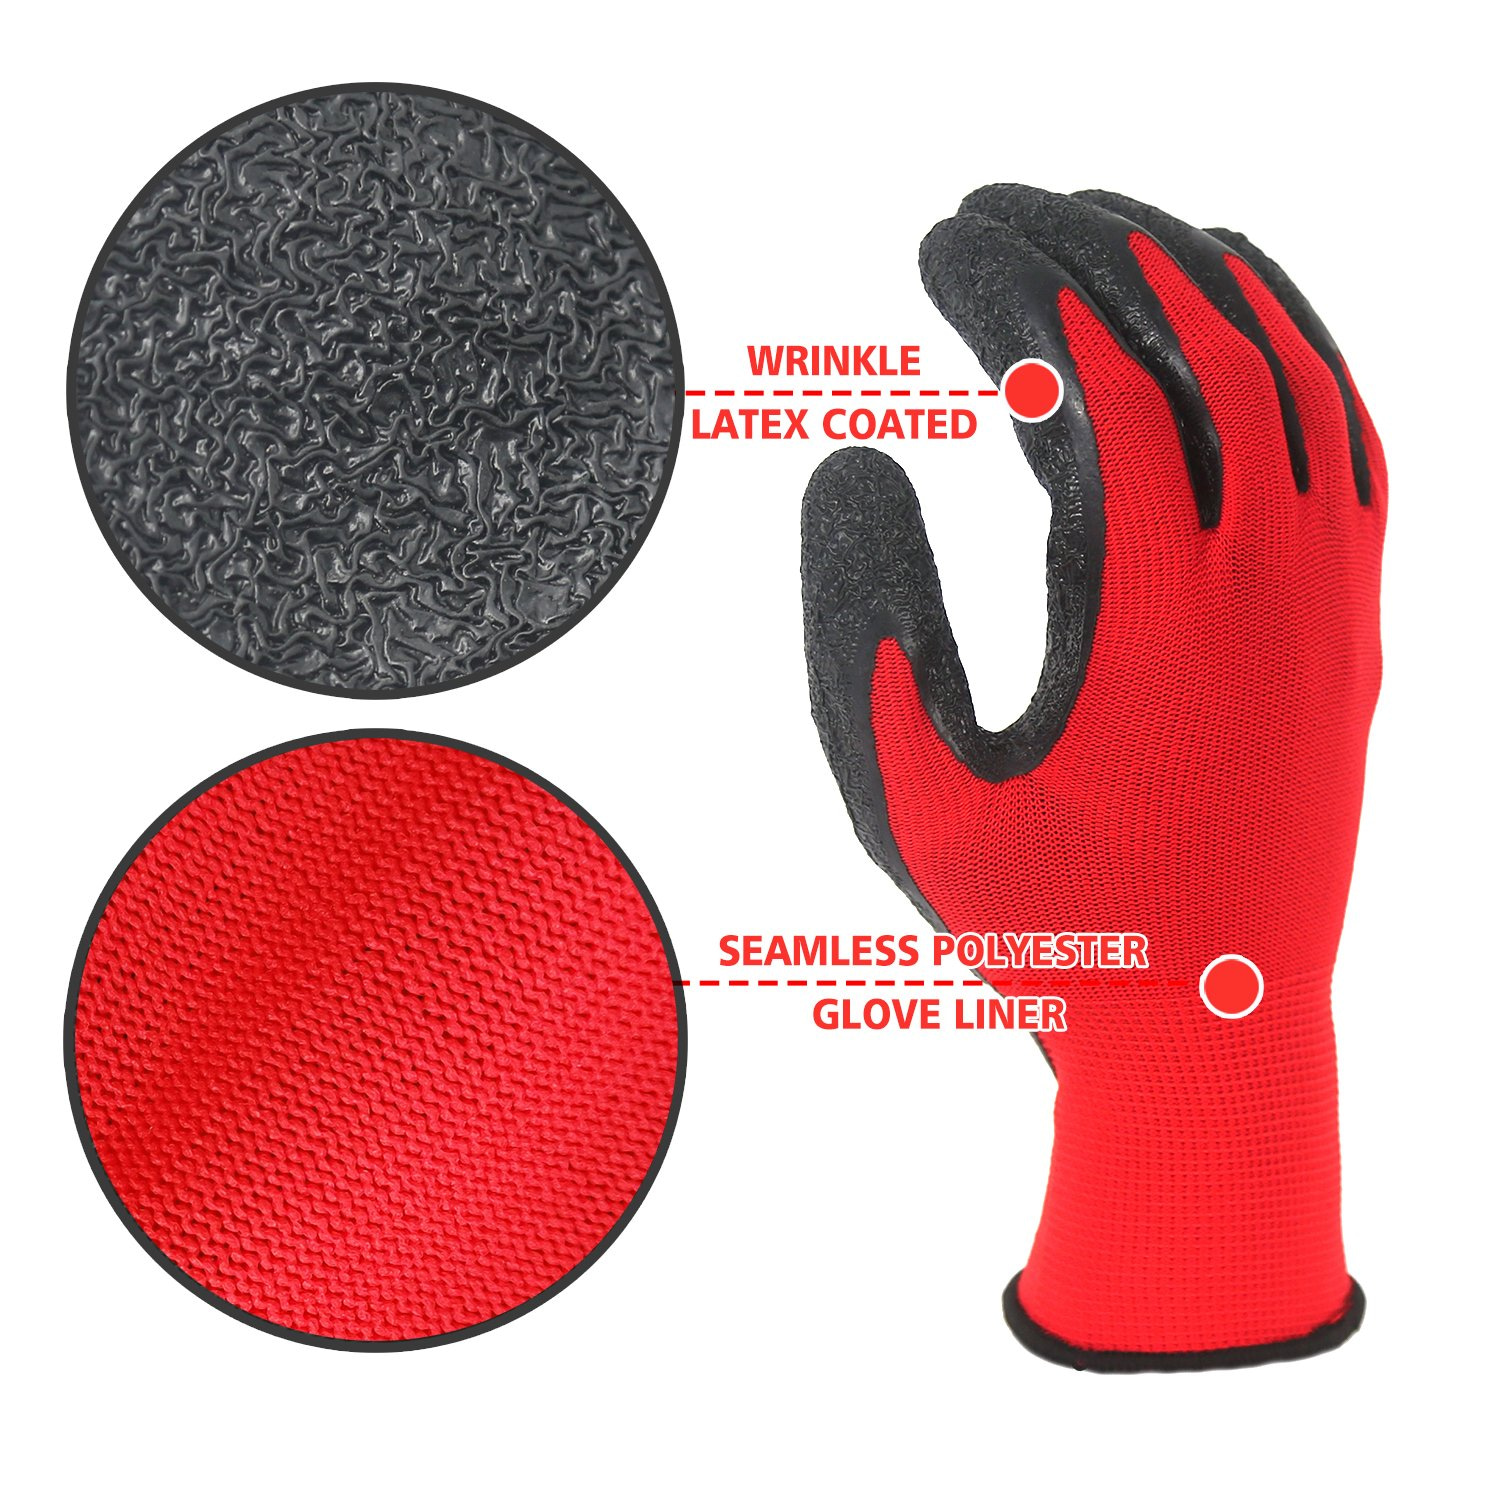 EvridWear Safety Work Gloves, Touchscreen Micro-Foam Nitrile